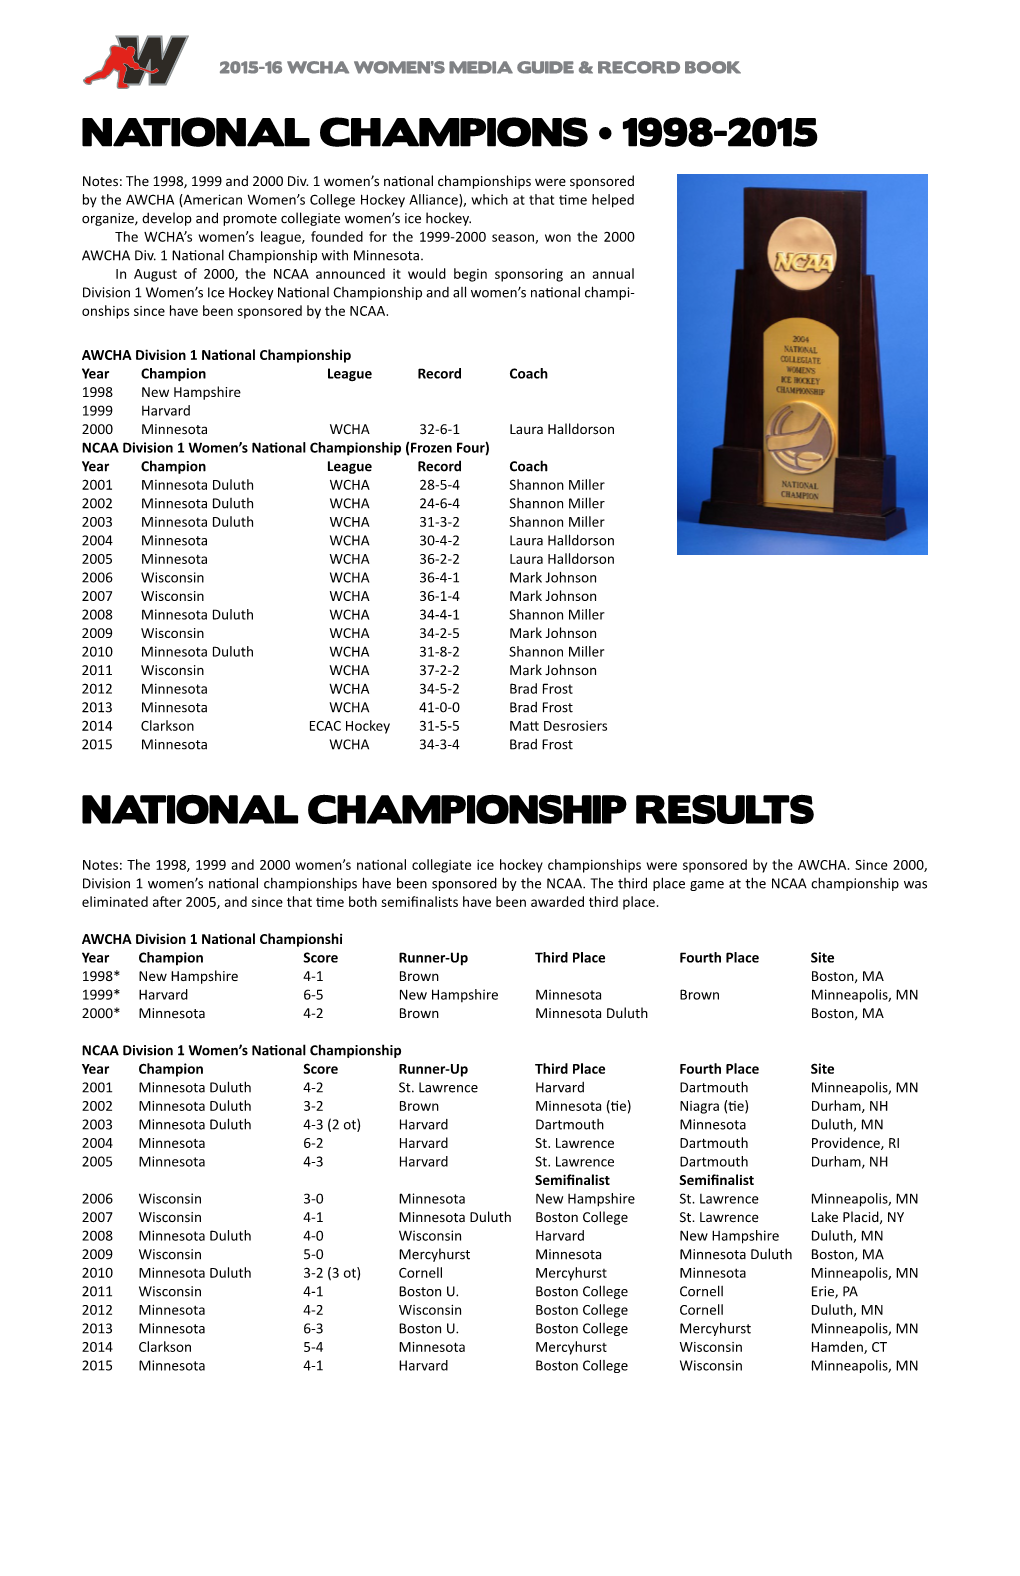 National Champions • 1998-2015 National Championship